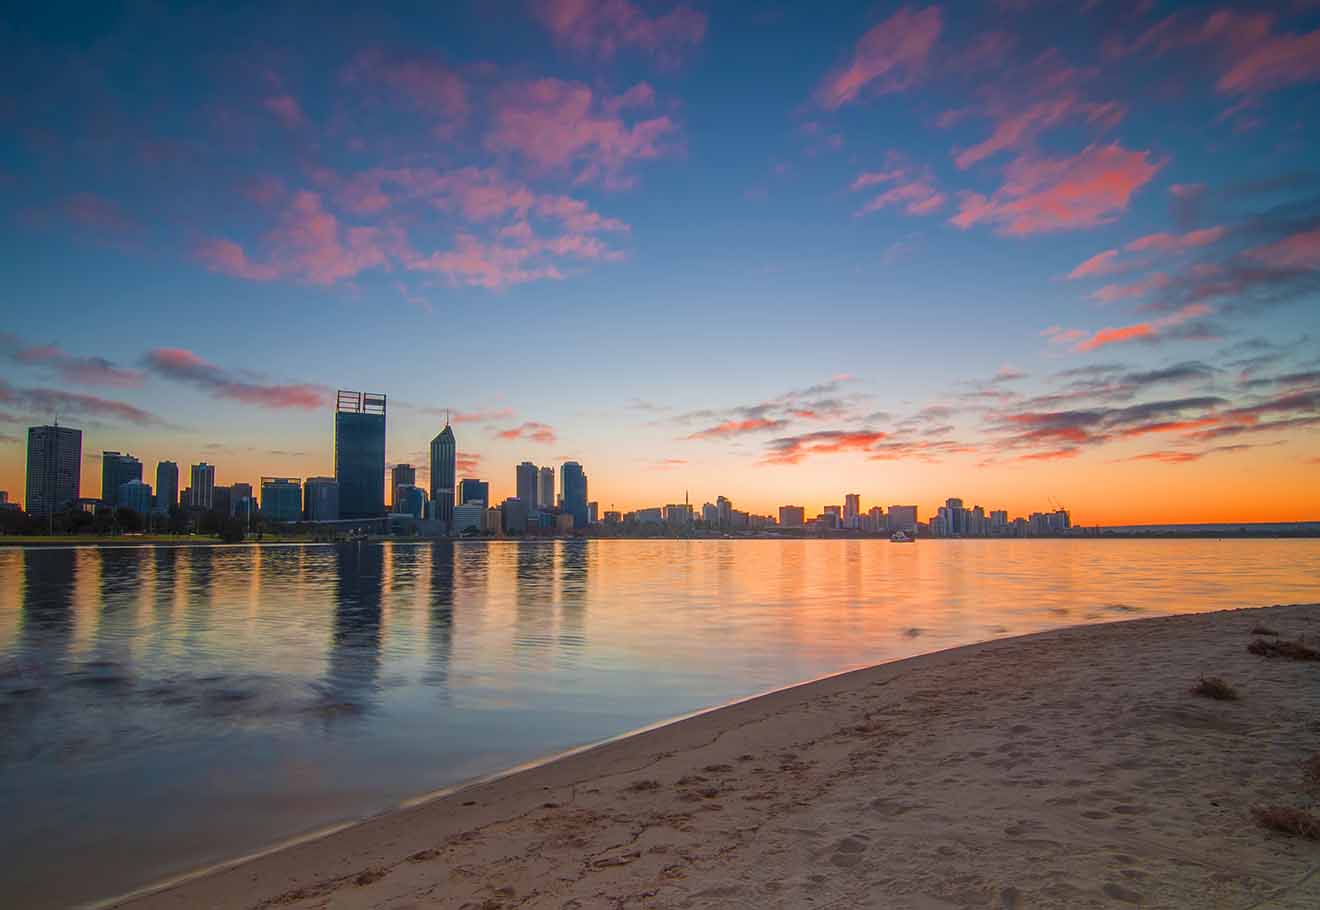 Western Australia - Vibrant Colors Sunrise View of Perth Skyline